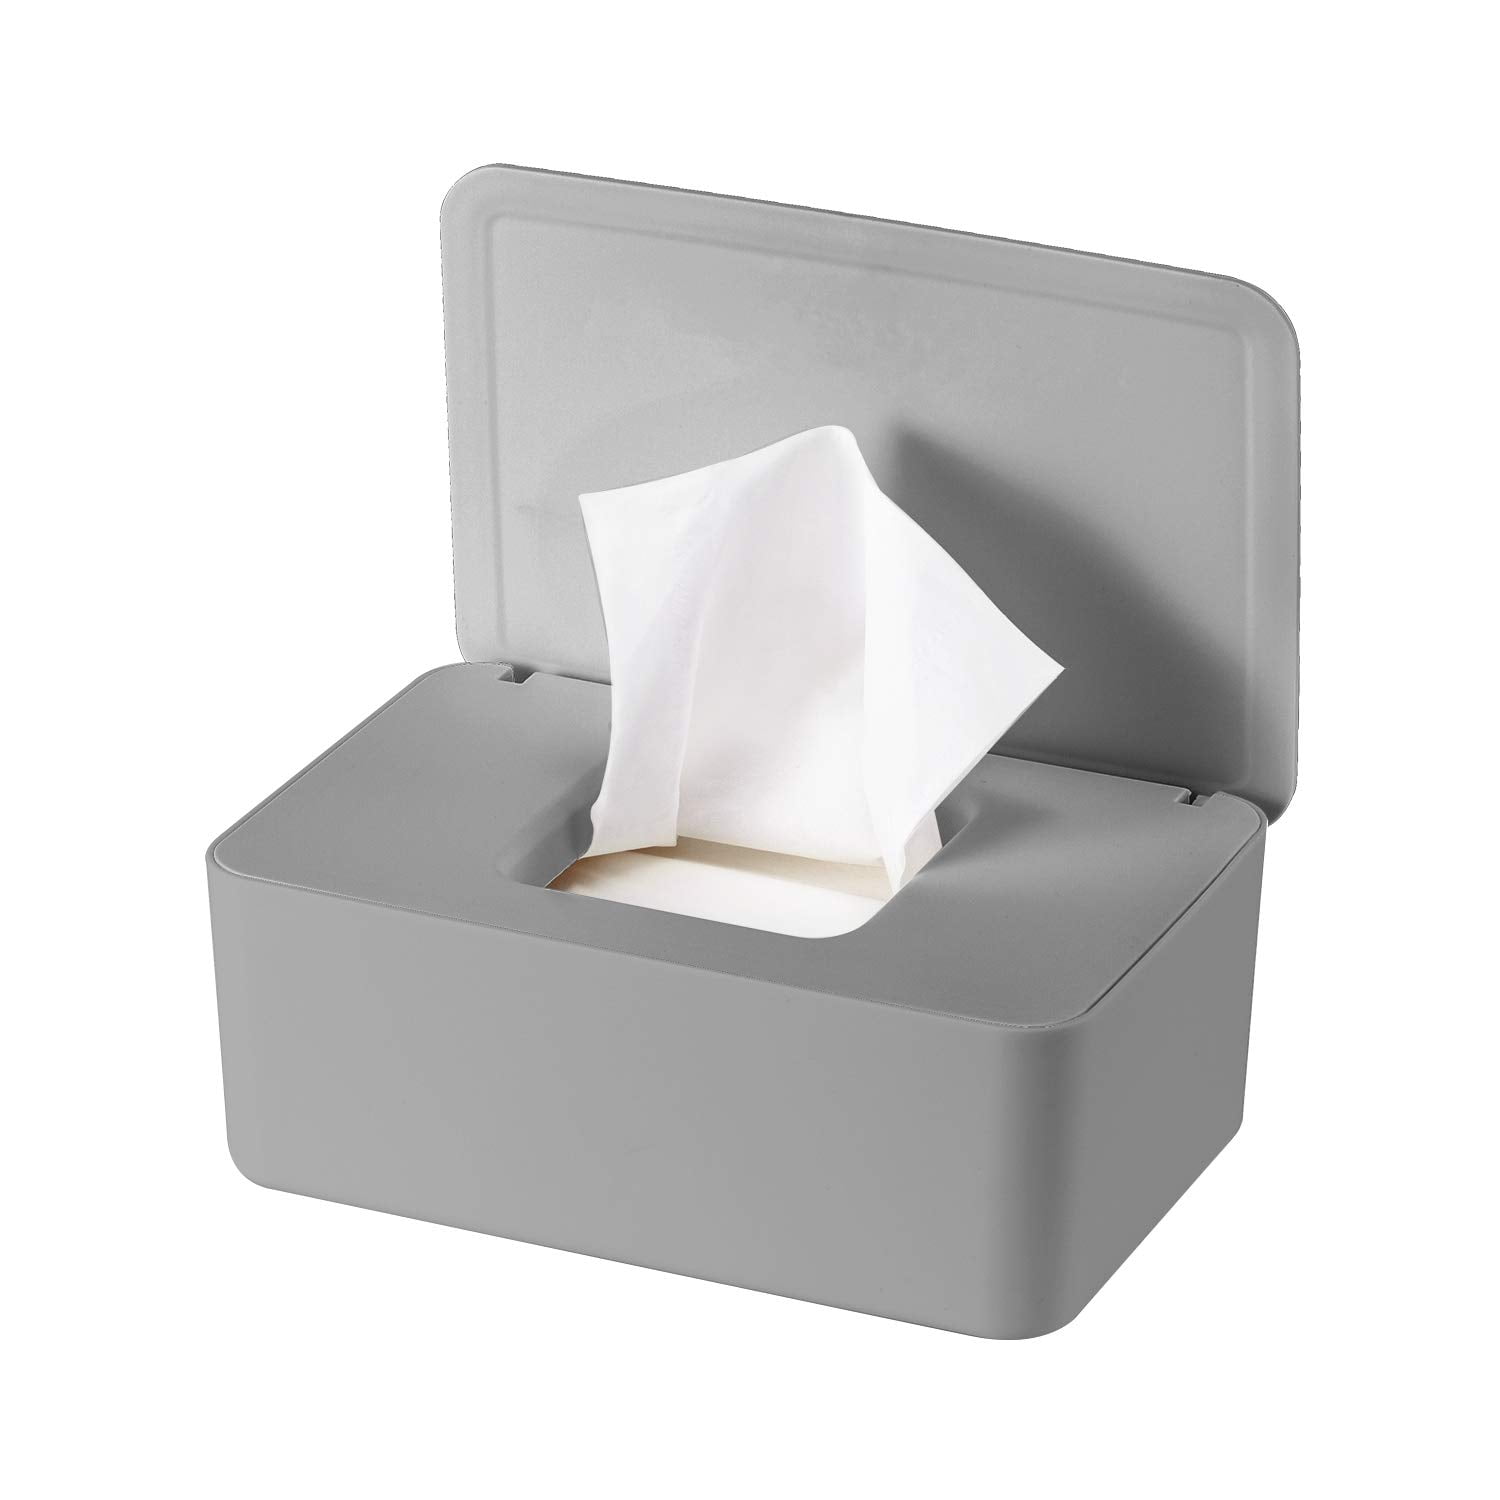 Napkin Napkin Box Holder with Lid for Home Office Dustproof Holder Tissue Storage Box,Toilet Storage Box,White Wipes Dispenser Box Dry Wet Tissue Paper Case Holder